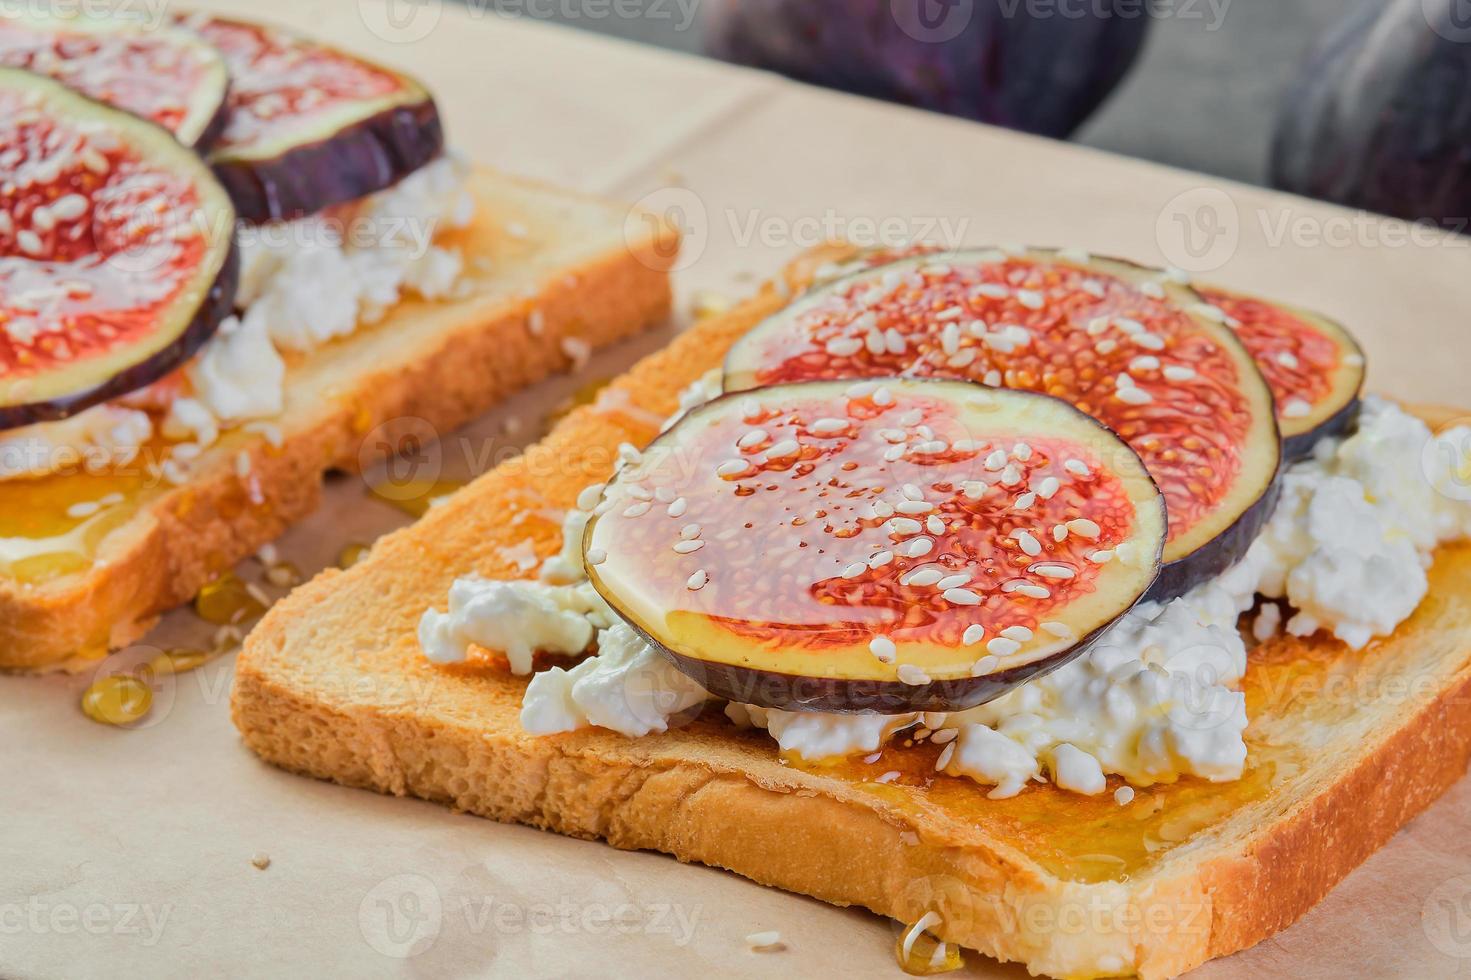 bruschetta con miel de higos, semillas de sésamo y queso blando fresco, sobre papel artesanal, primer plano, enfoque selectivo en tostadas foto